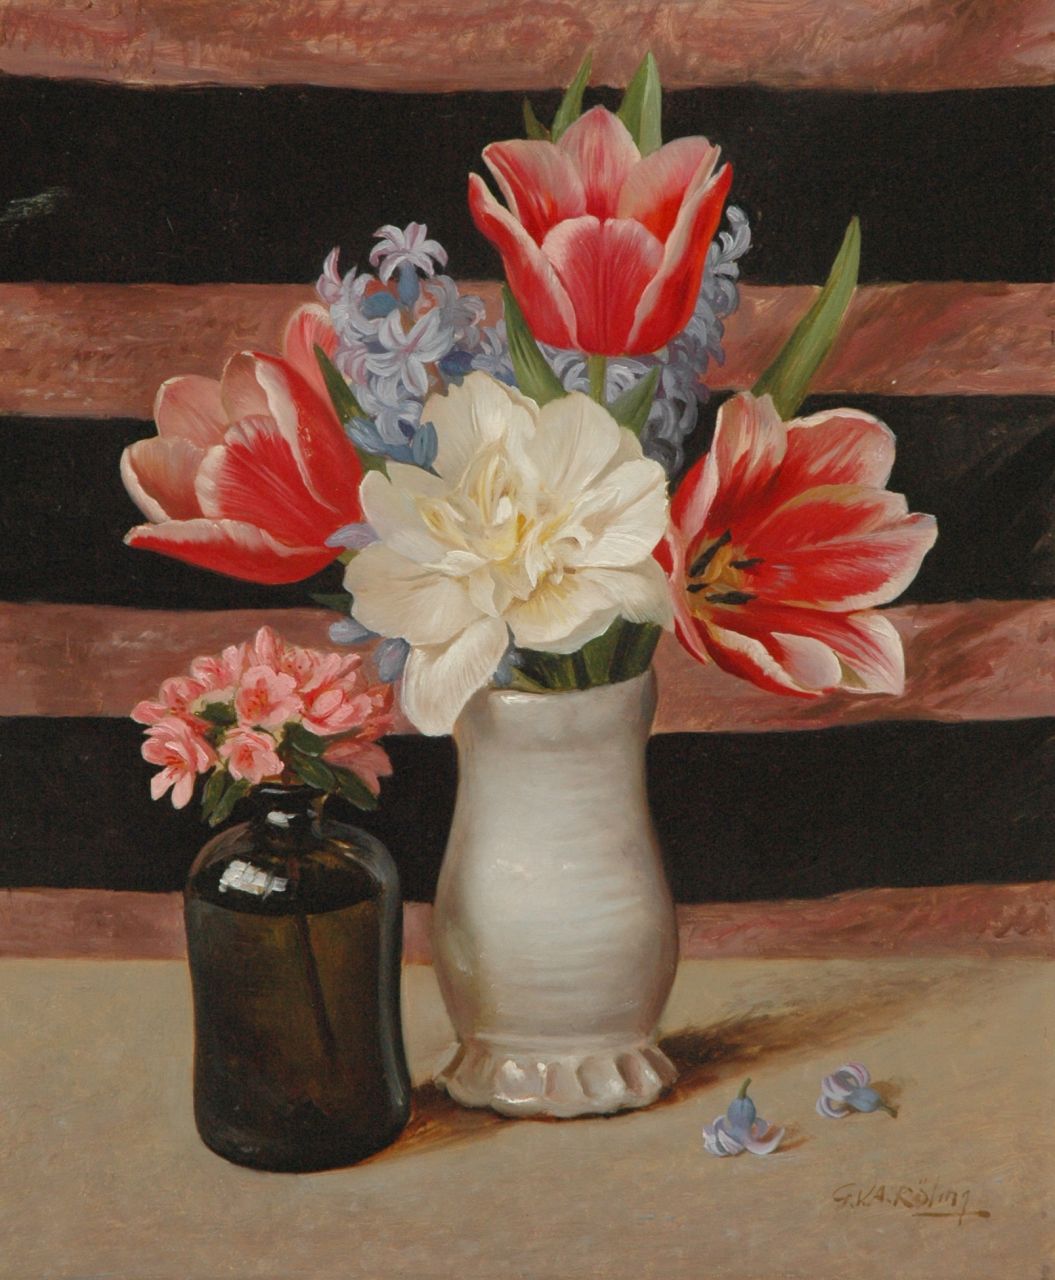 Röling G.V.A.  | Gerard Victor Alphons 'Gé' Röling, A still life with tulips and hyacinth, Öl auf Holzfaser 45,6 x 37,7 cm, signed l.r.